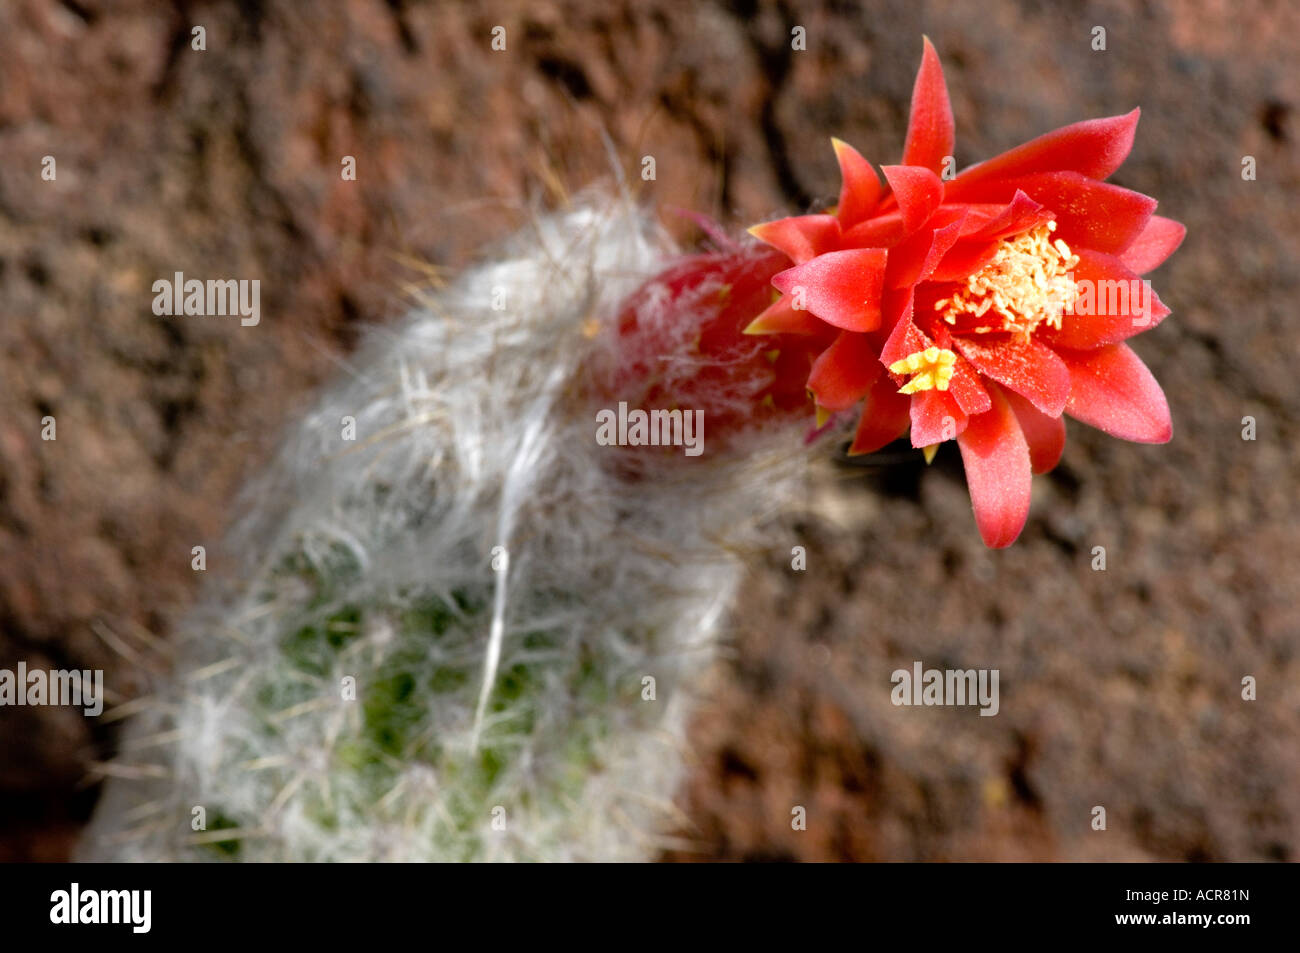 Red flowering cactus Stock Photo